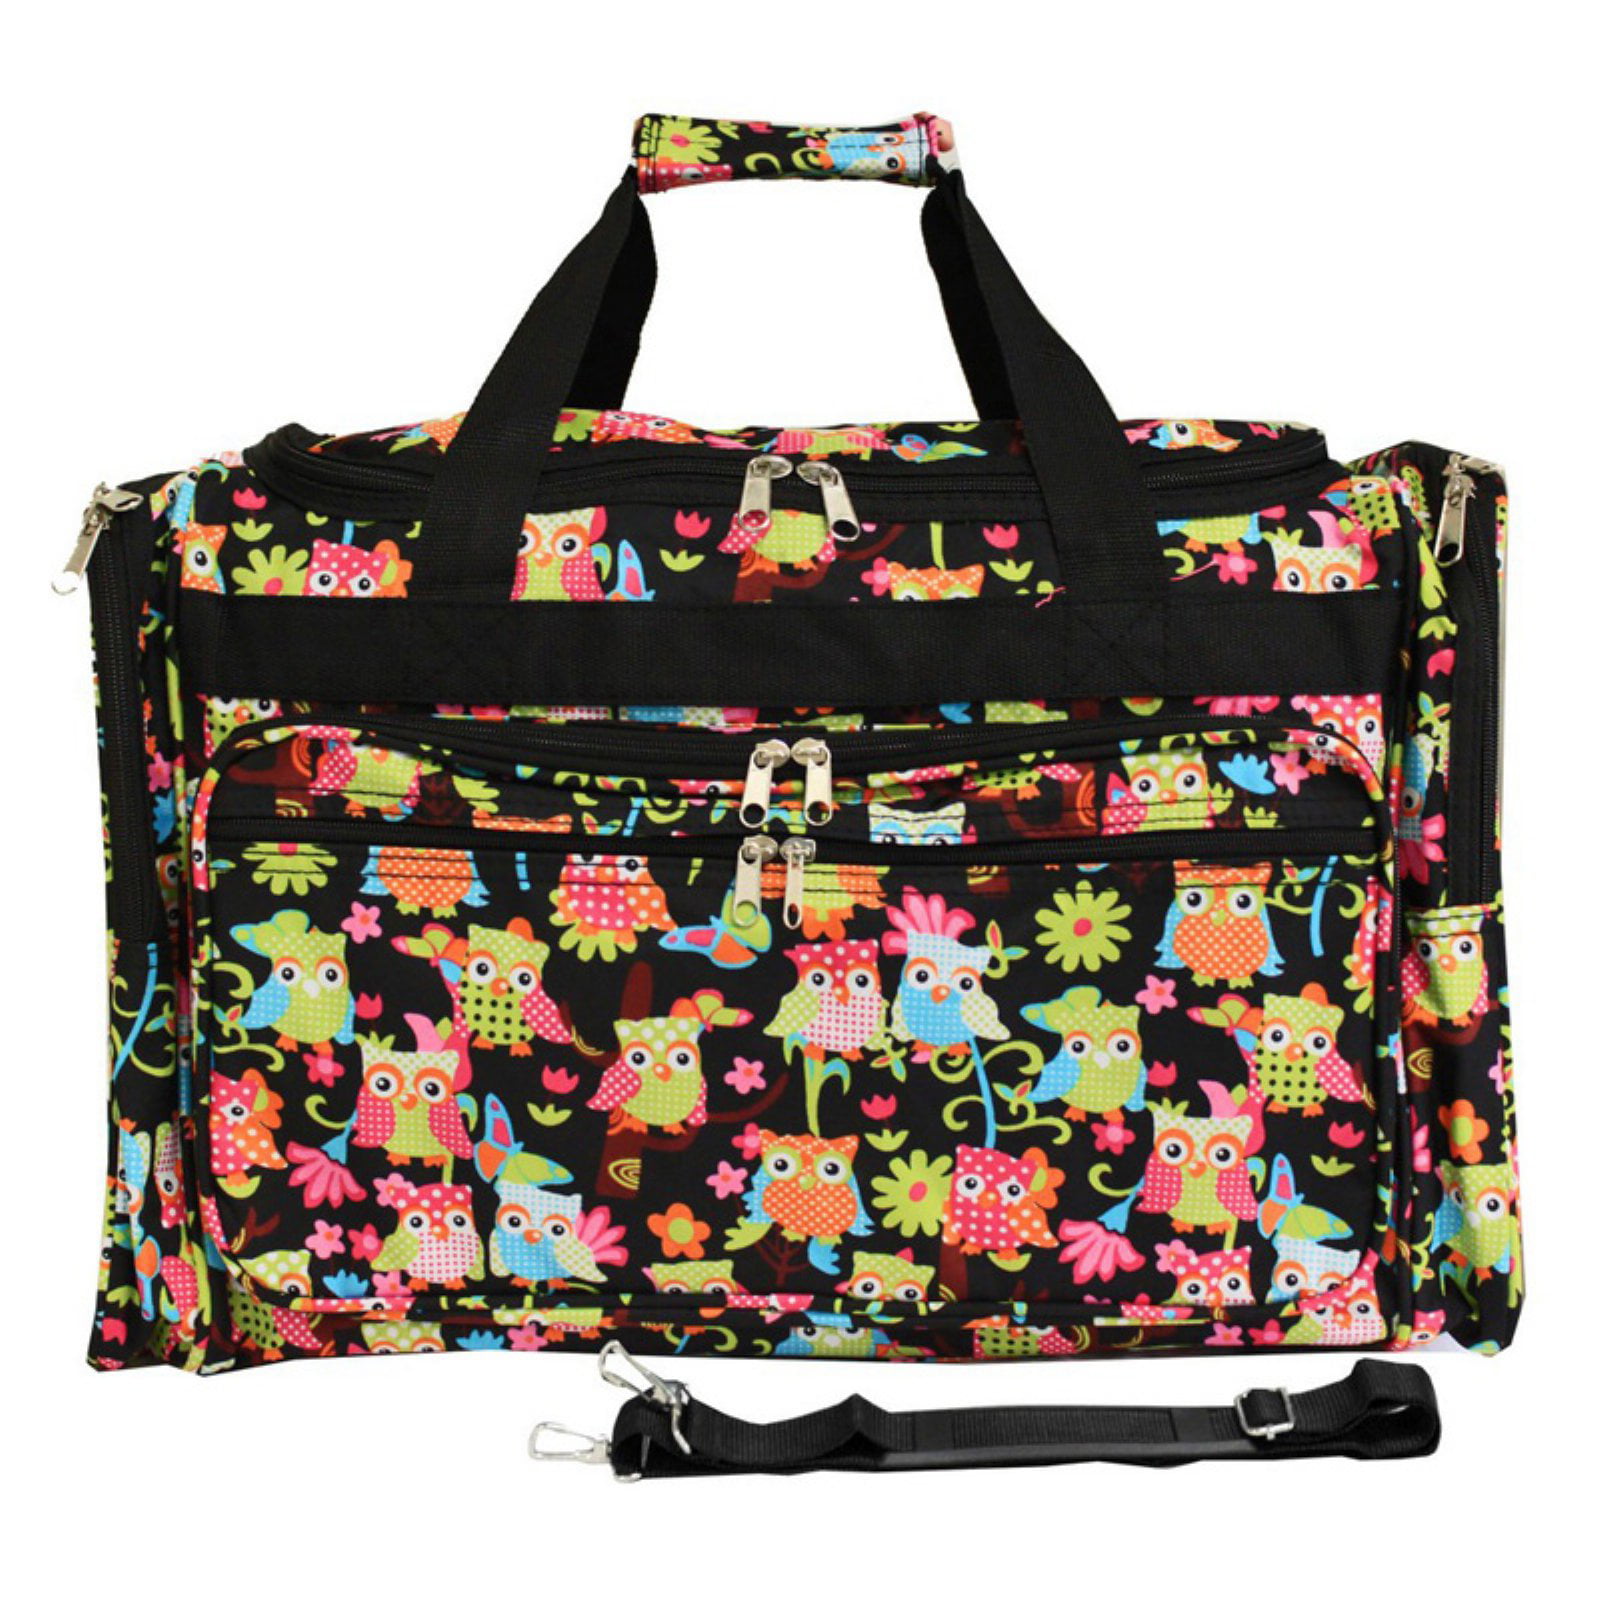  InterestPrint Travel Duffel Bag, Pink White spirals Twist Bags  for Men Women Travel Tote Waterproof Bag Luggage Bag Unisex Duffle Bag